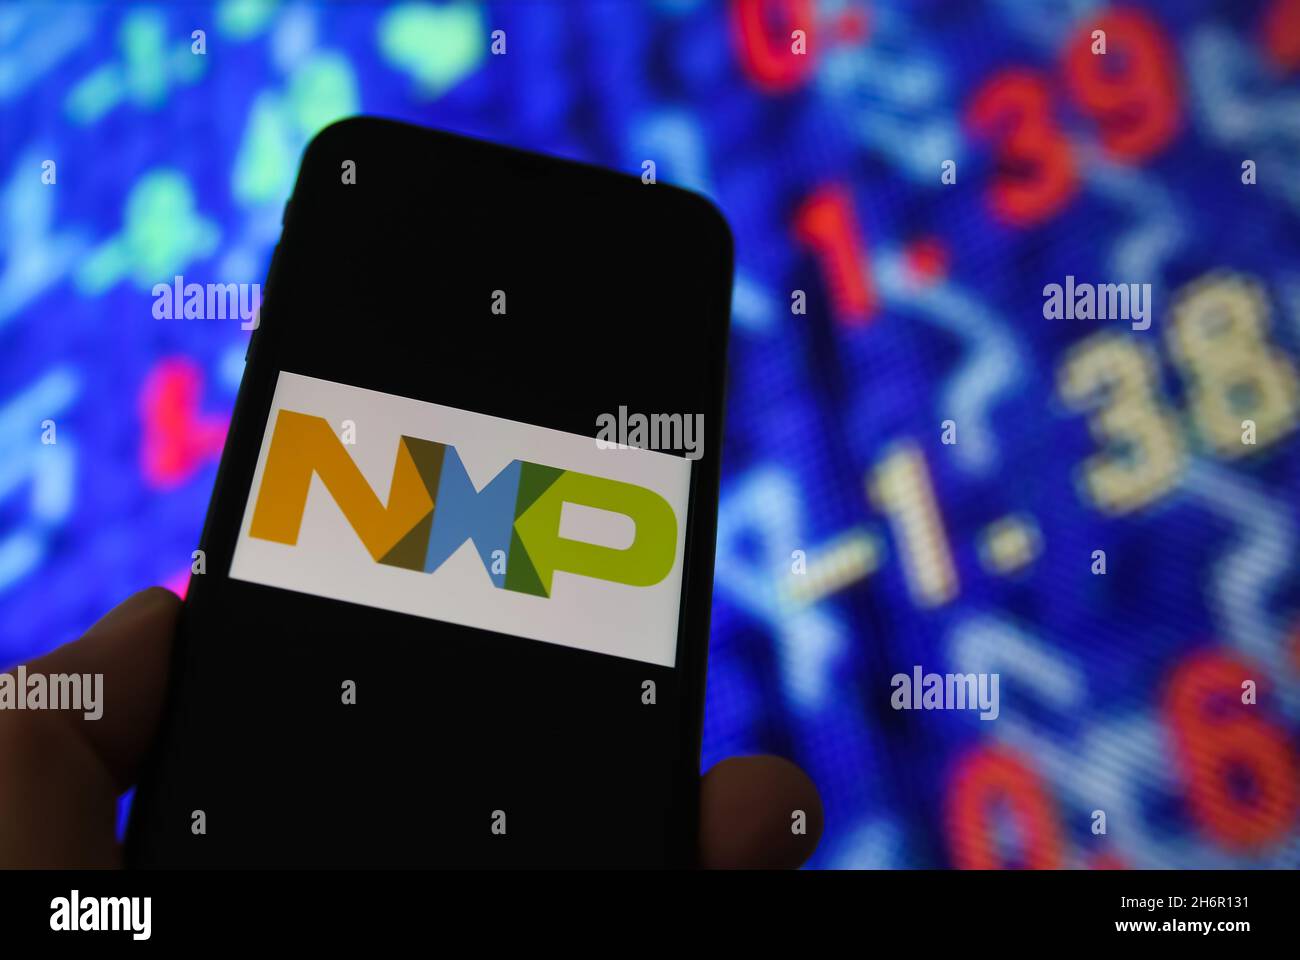 Nxp share price